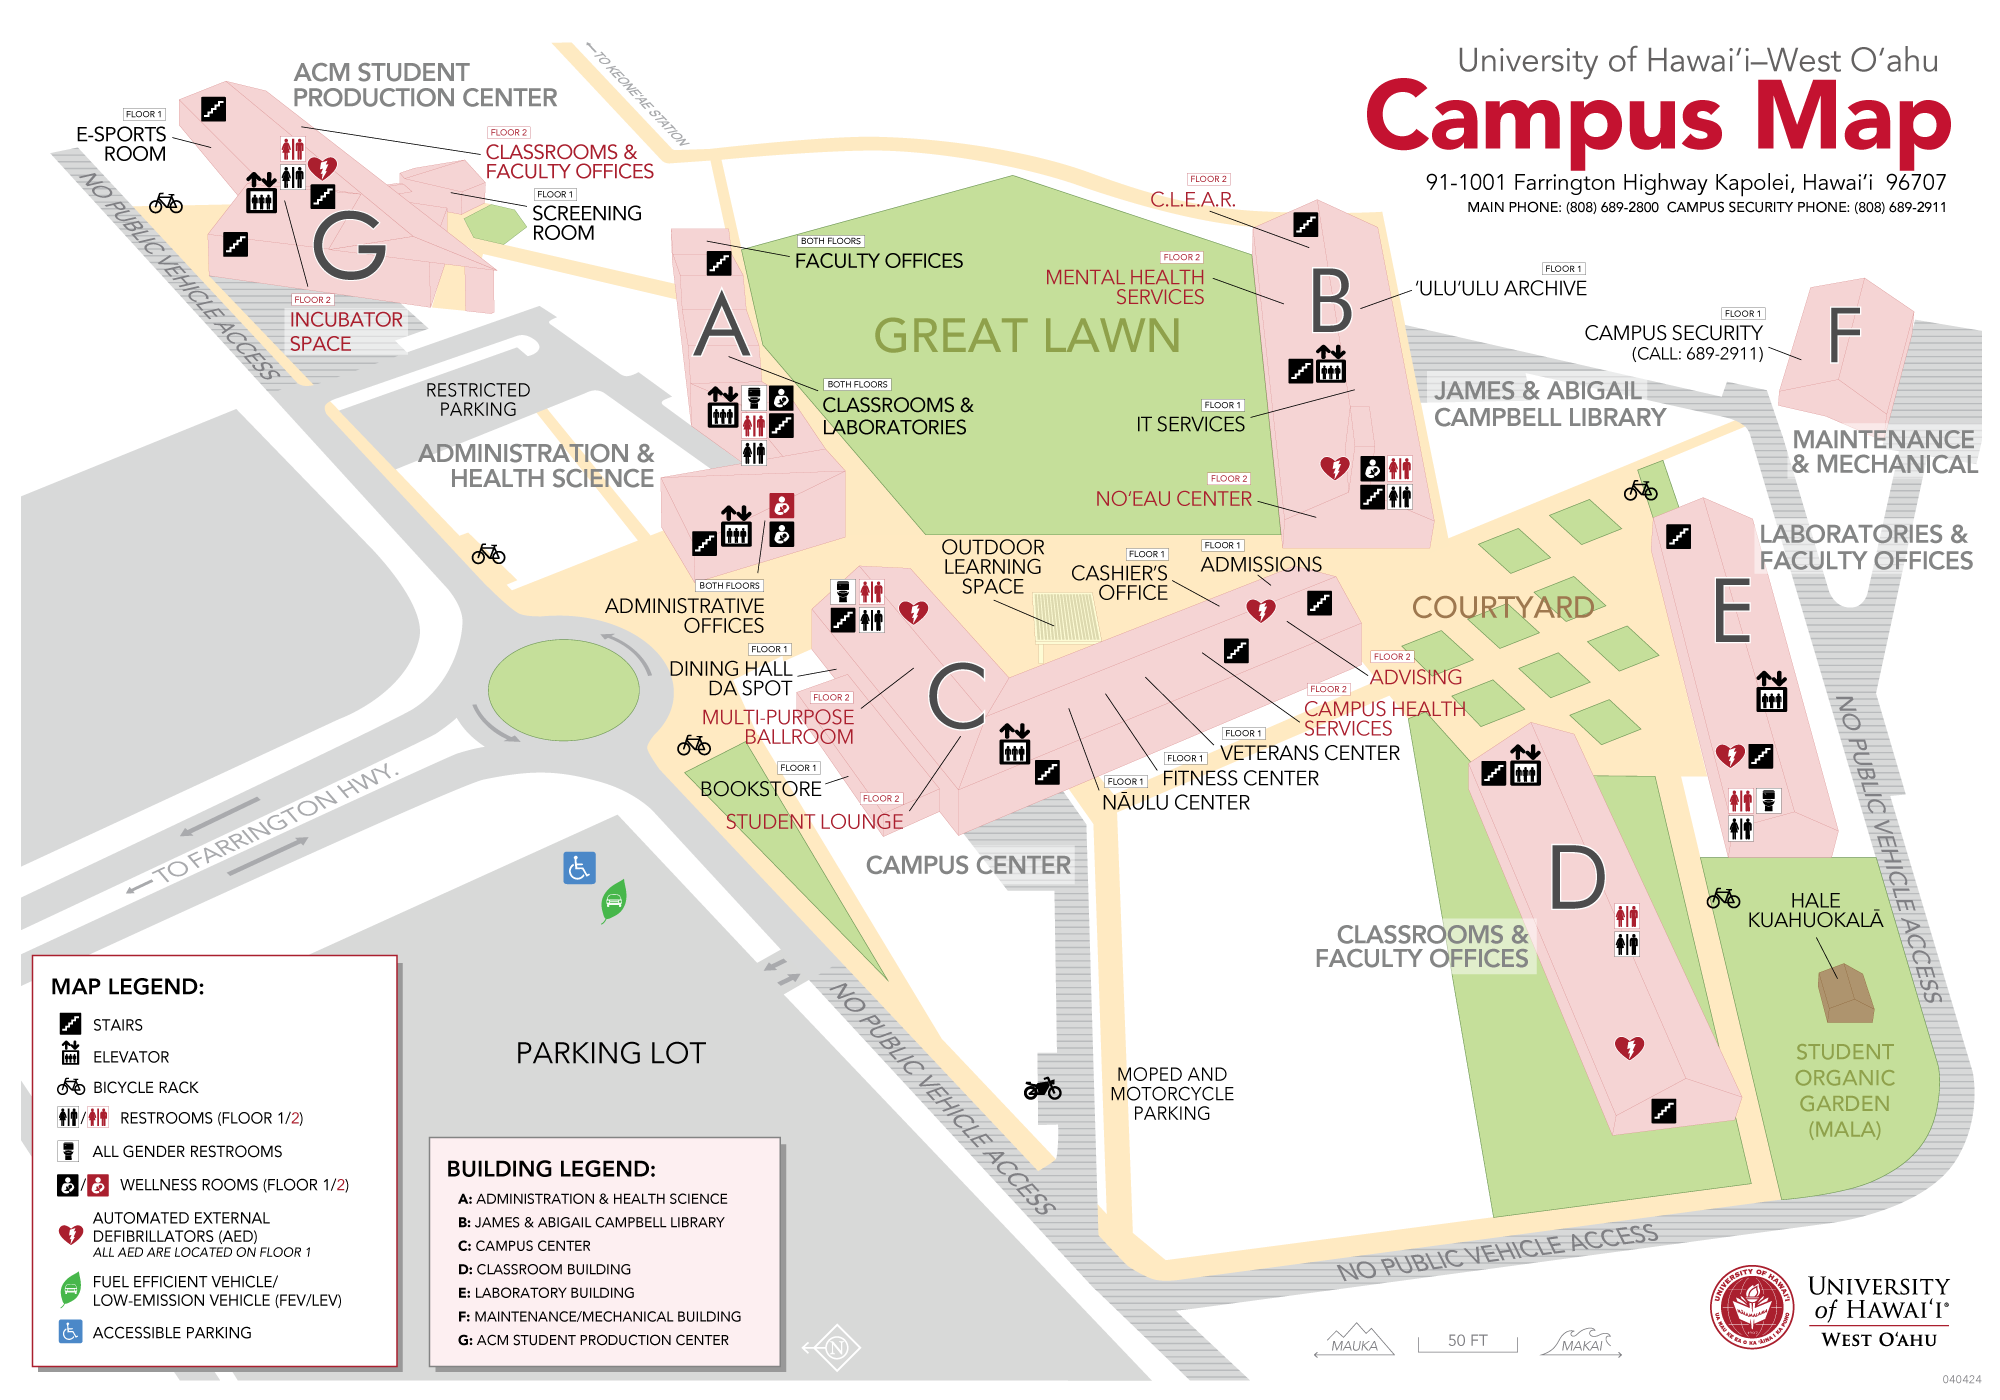 UHWO Campus Map